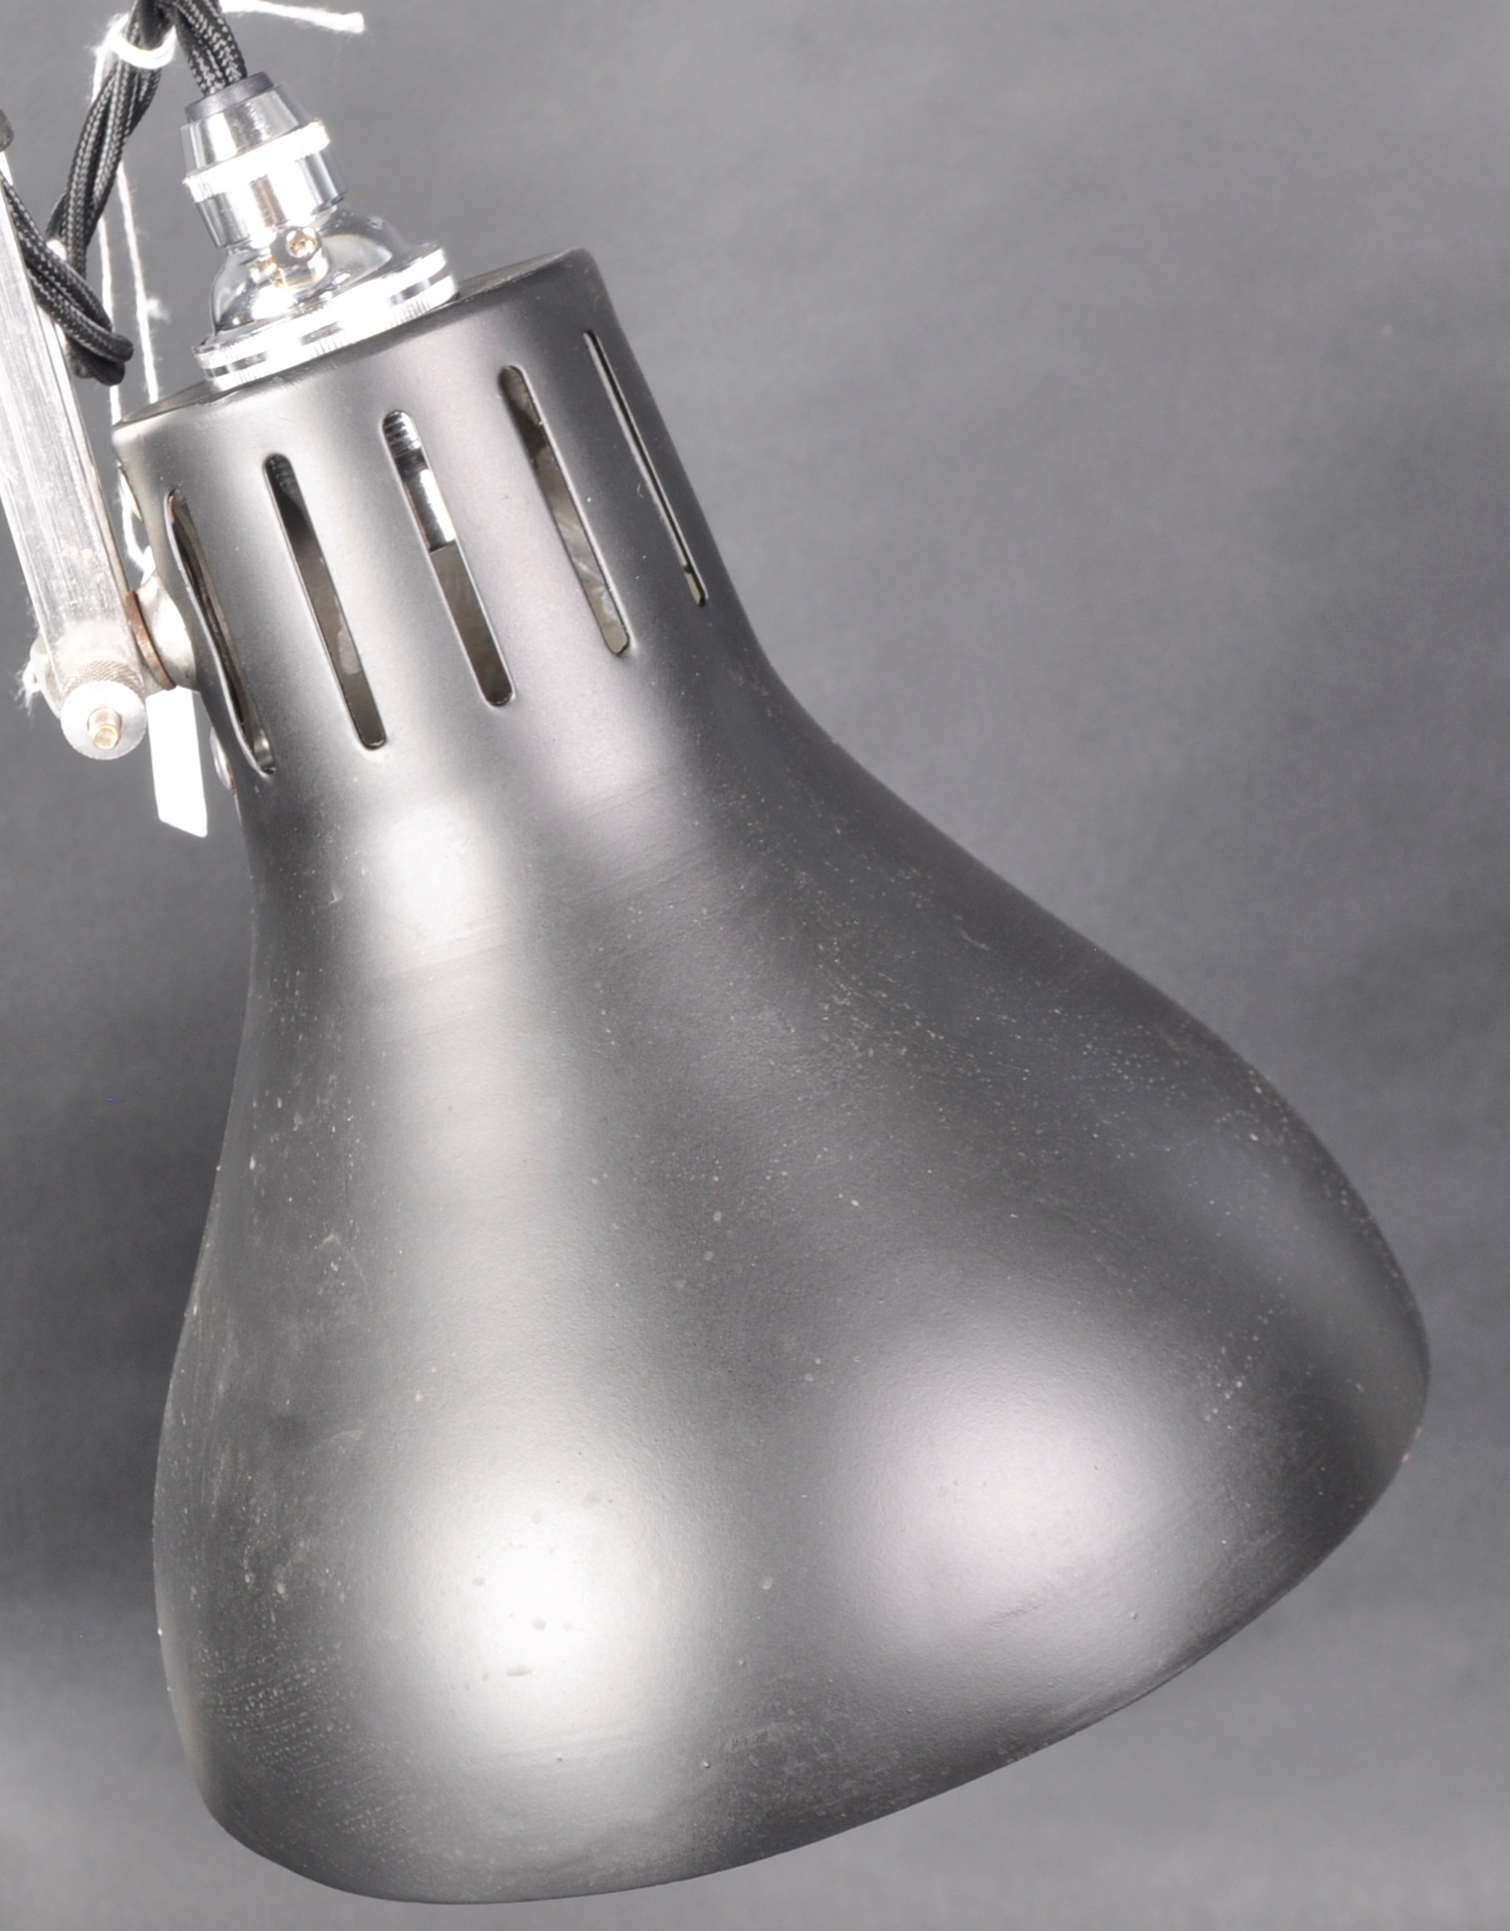 MID CENTURY VINTAGE COUNTERBALANCE DESK LAMP - Image 3 of 4